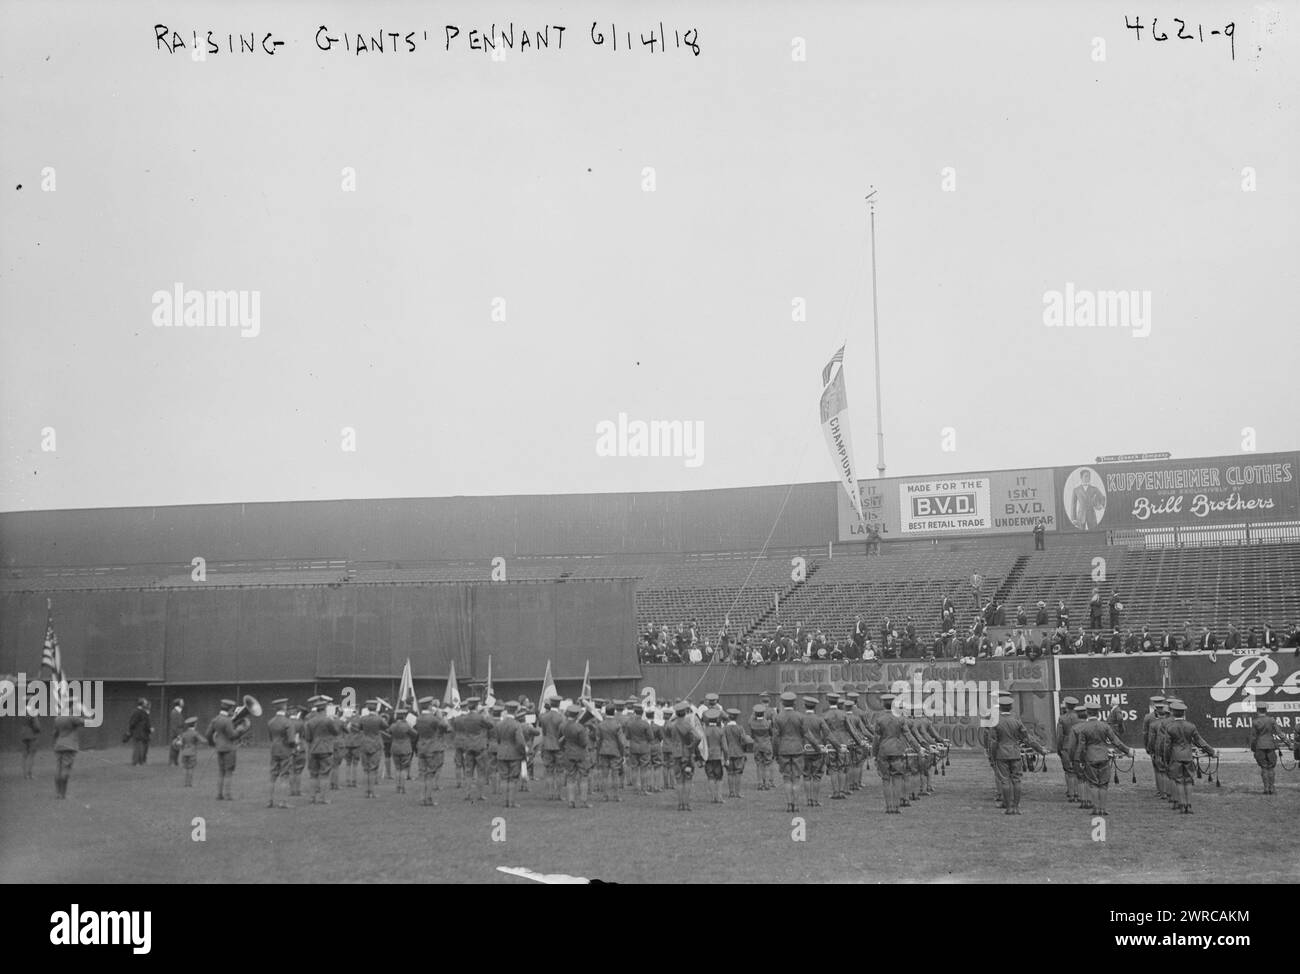 Raising Giants pennant, 6/14/18, 1918 June 14, Baseball, Glass negatives, 1 negative: glass Stock Photo